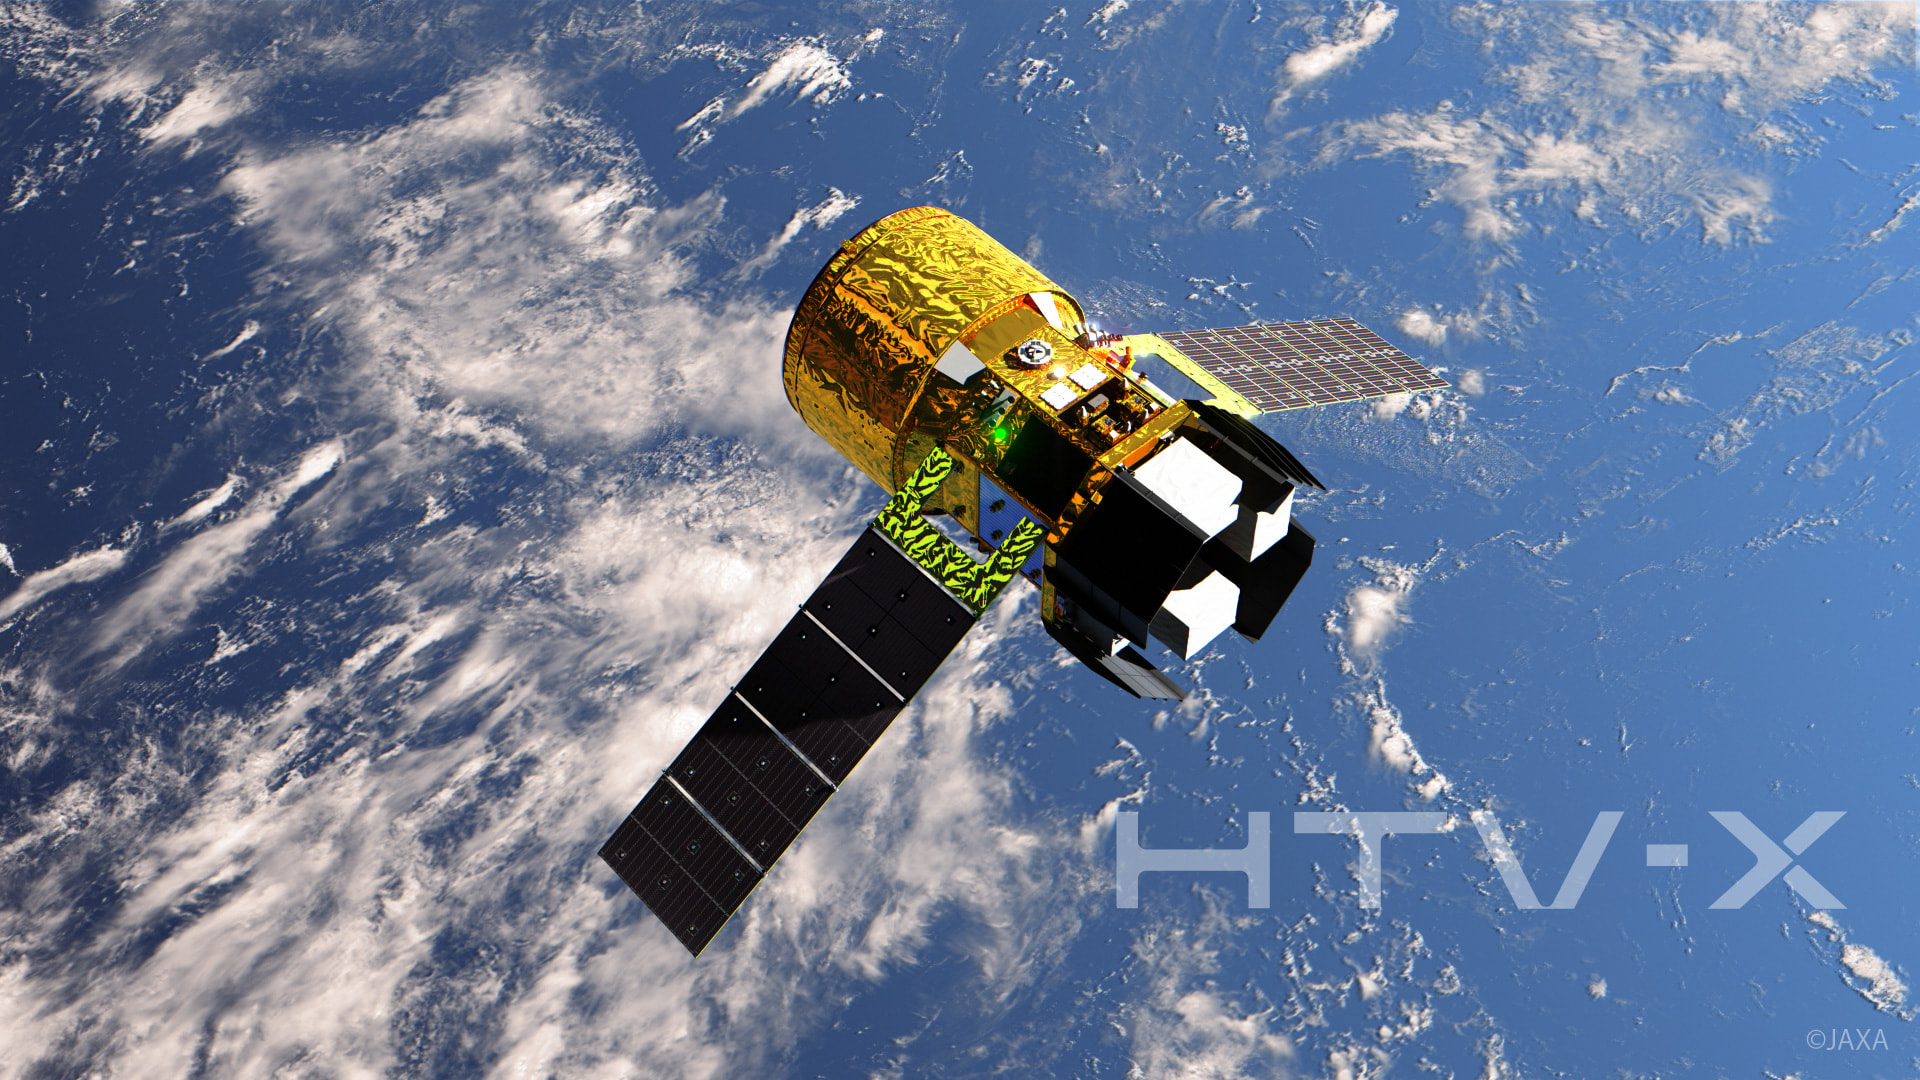 壁紙 C 新型宇宙ステーション補給機 Htv X Jaxa 有人宇宙技術部門